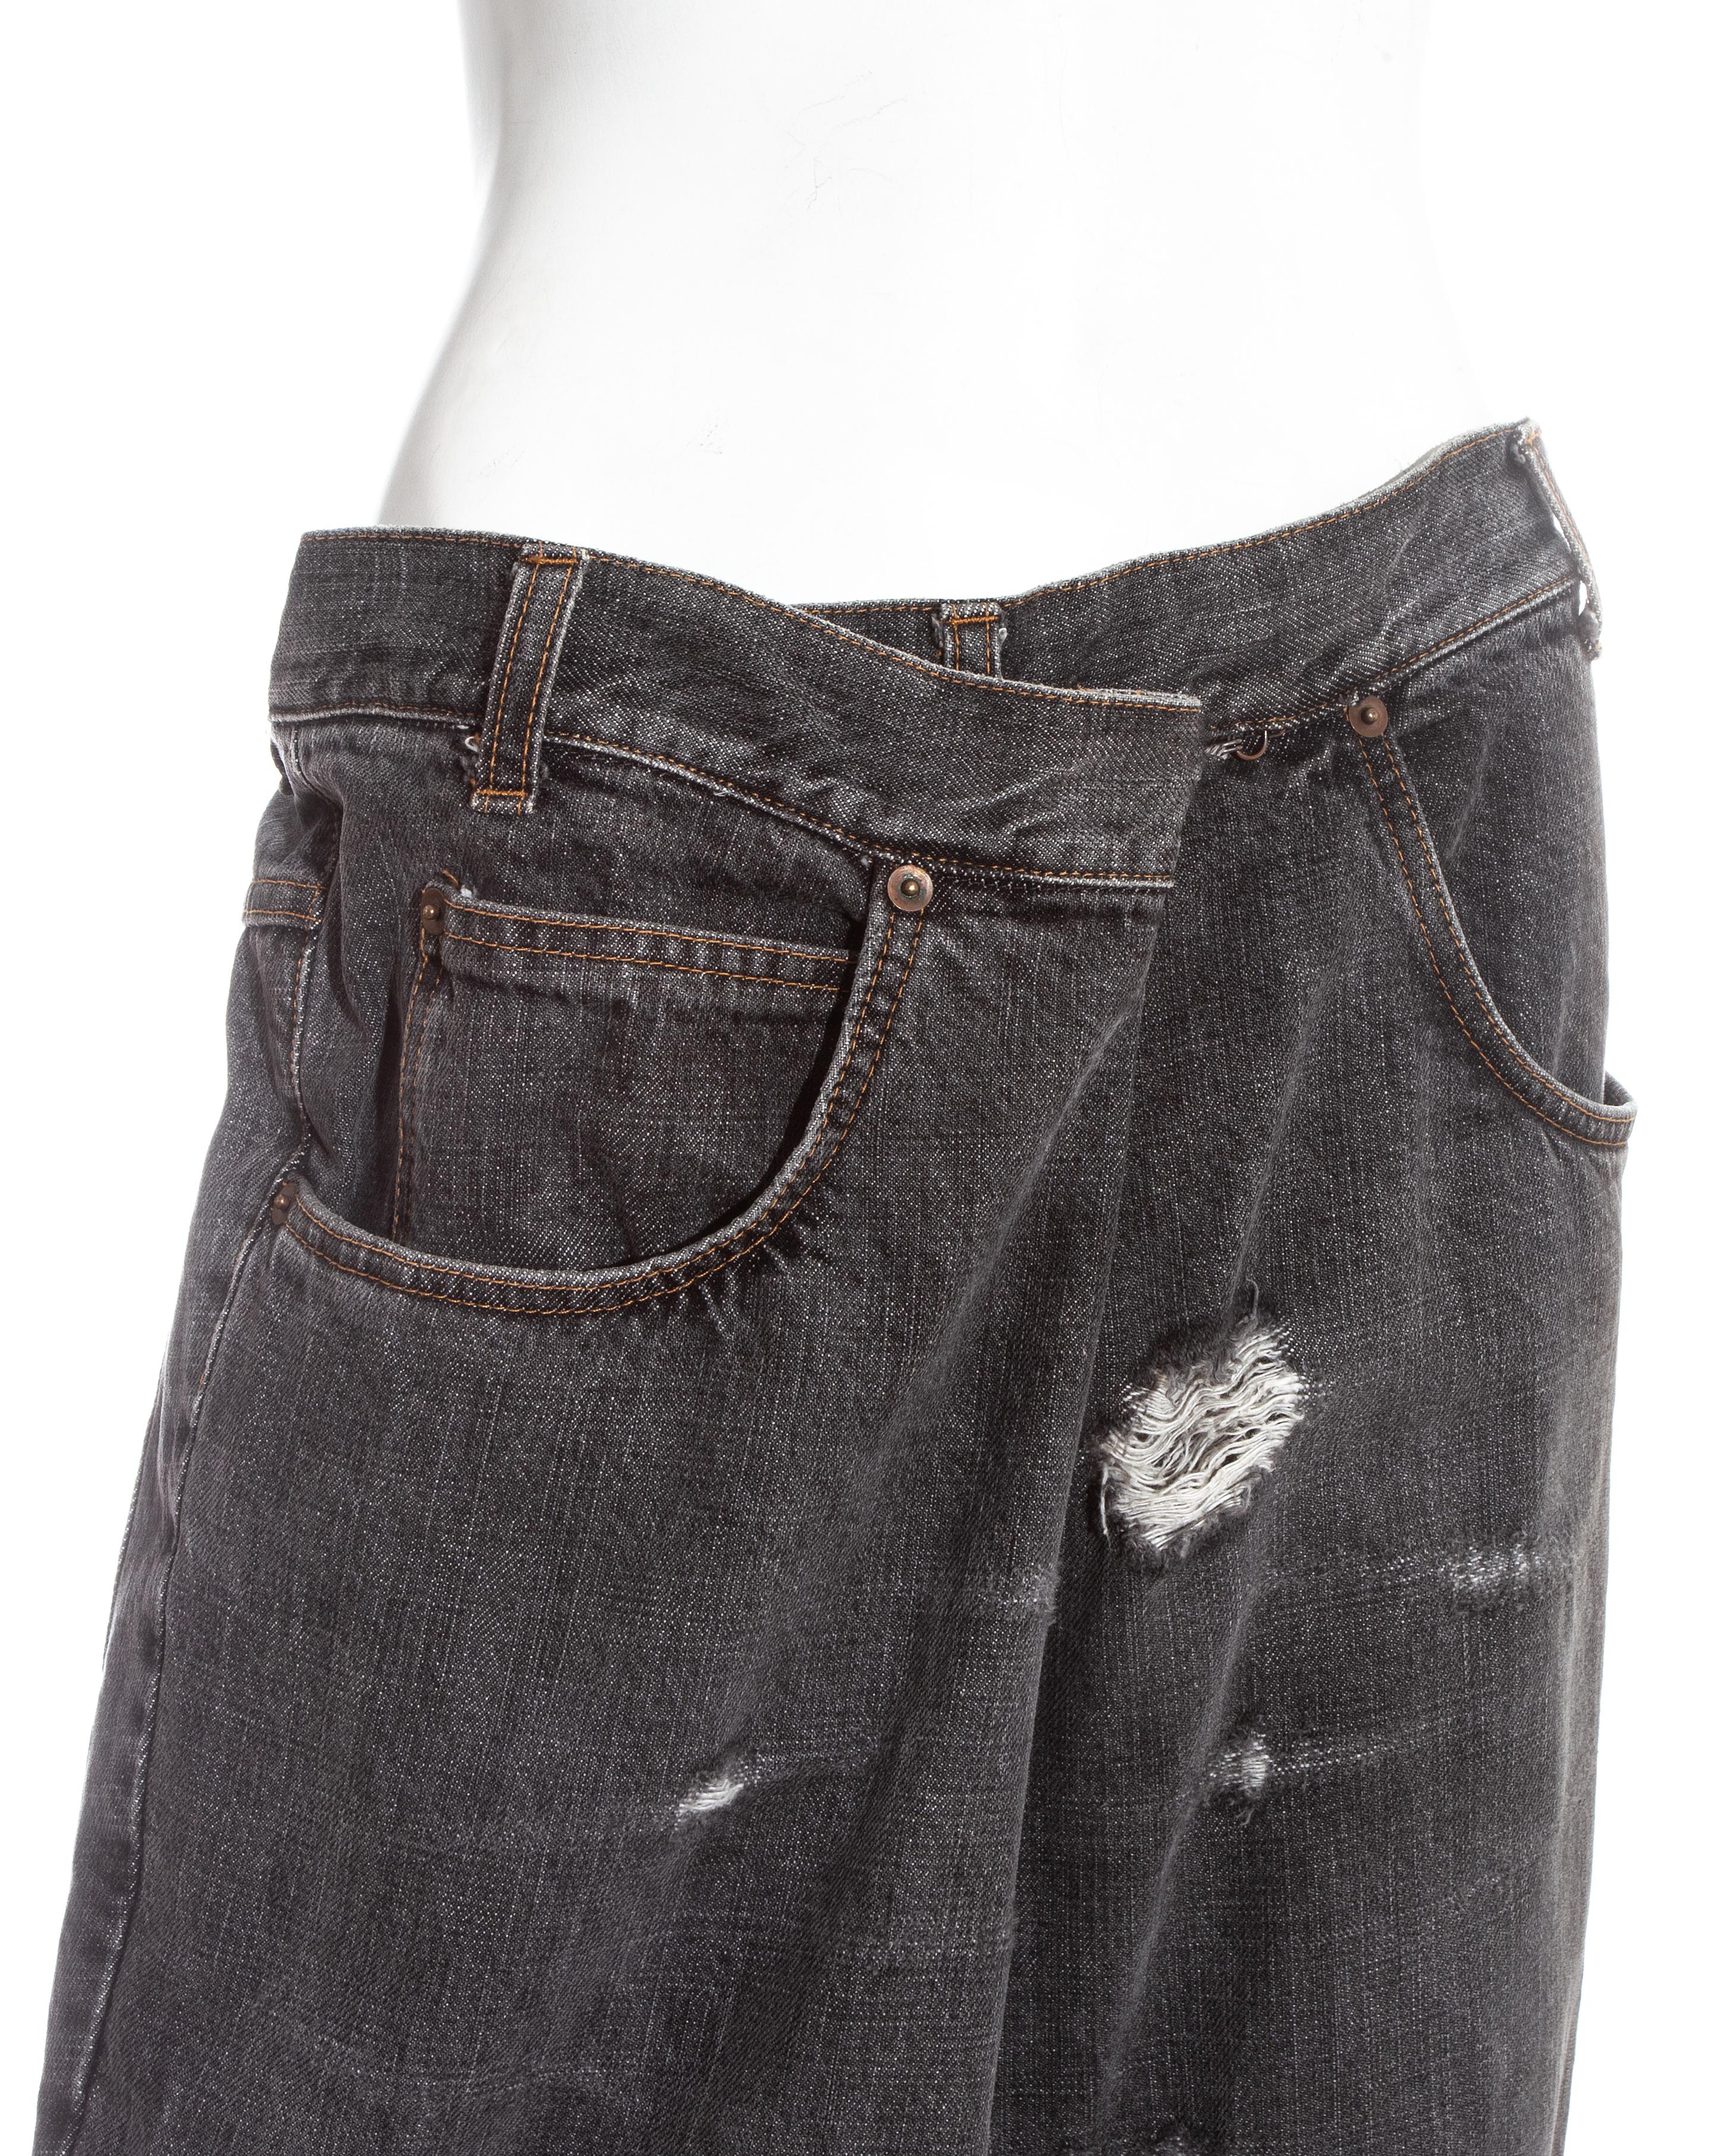 Black Margiela grey denim oversized size 78 jeans, fw 2000